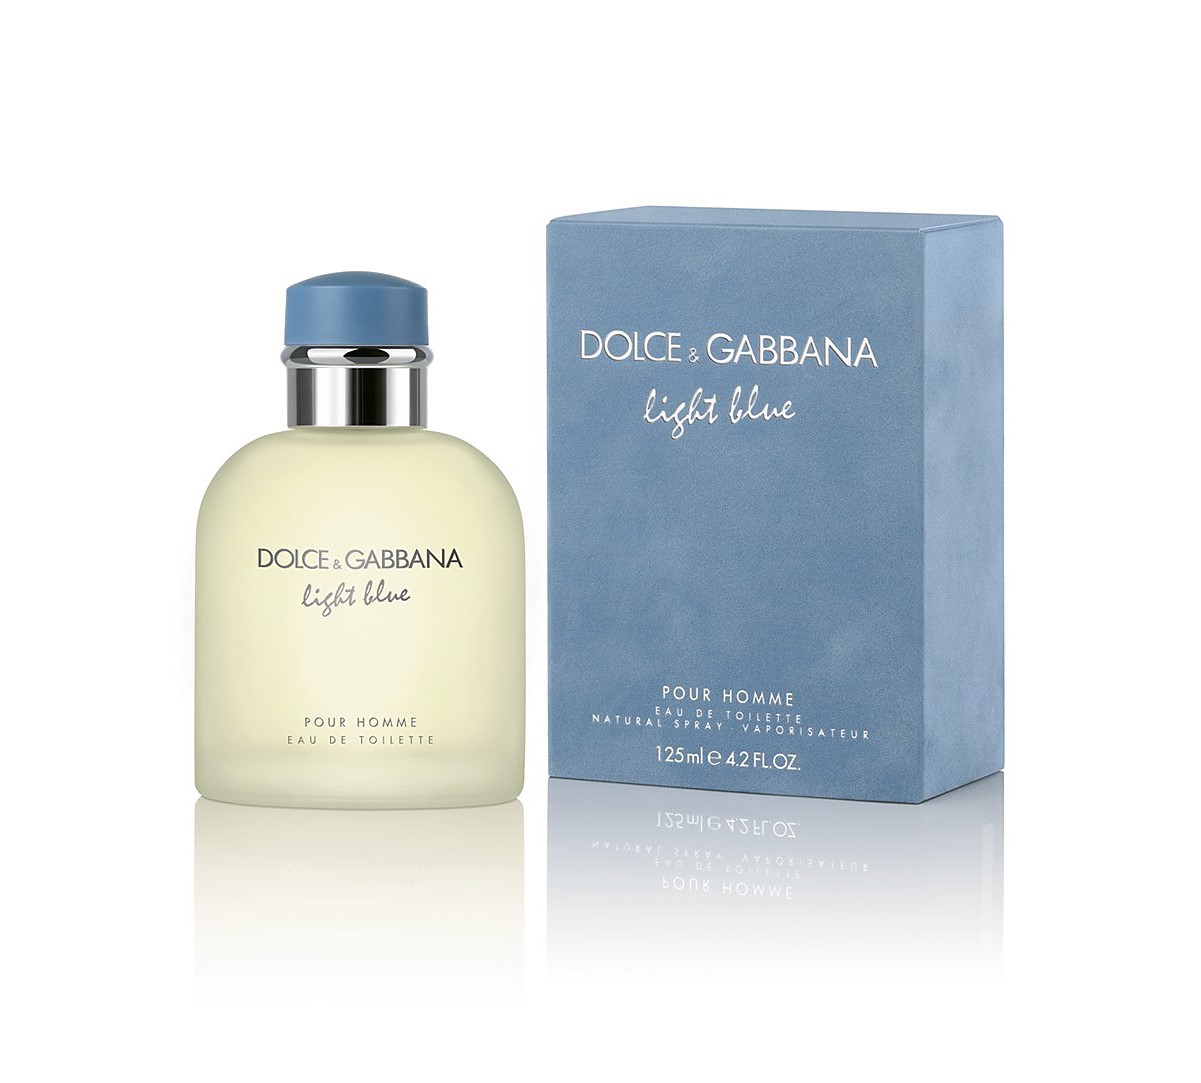 Купить Туалетная вода Dolce & Gabbana, Dolce & Gabbana Light Blue Pour Homme 125.0ml тестер, Италия